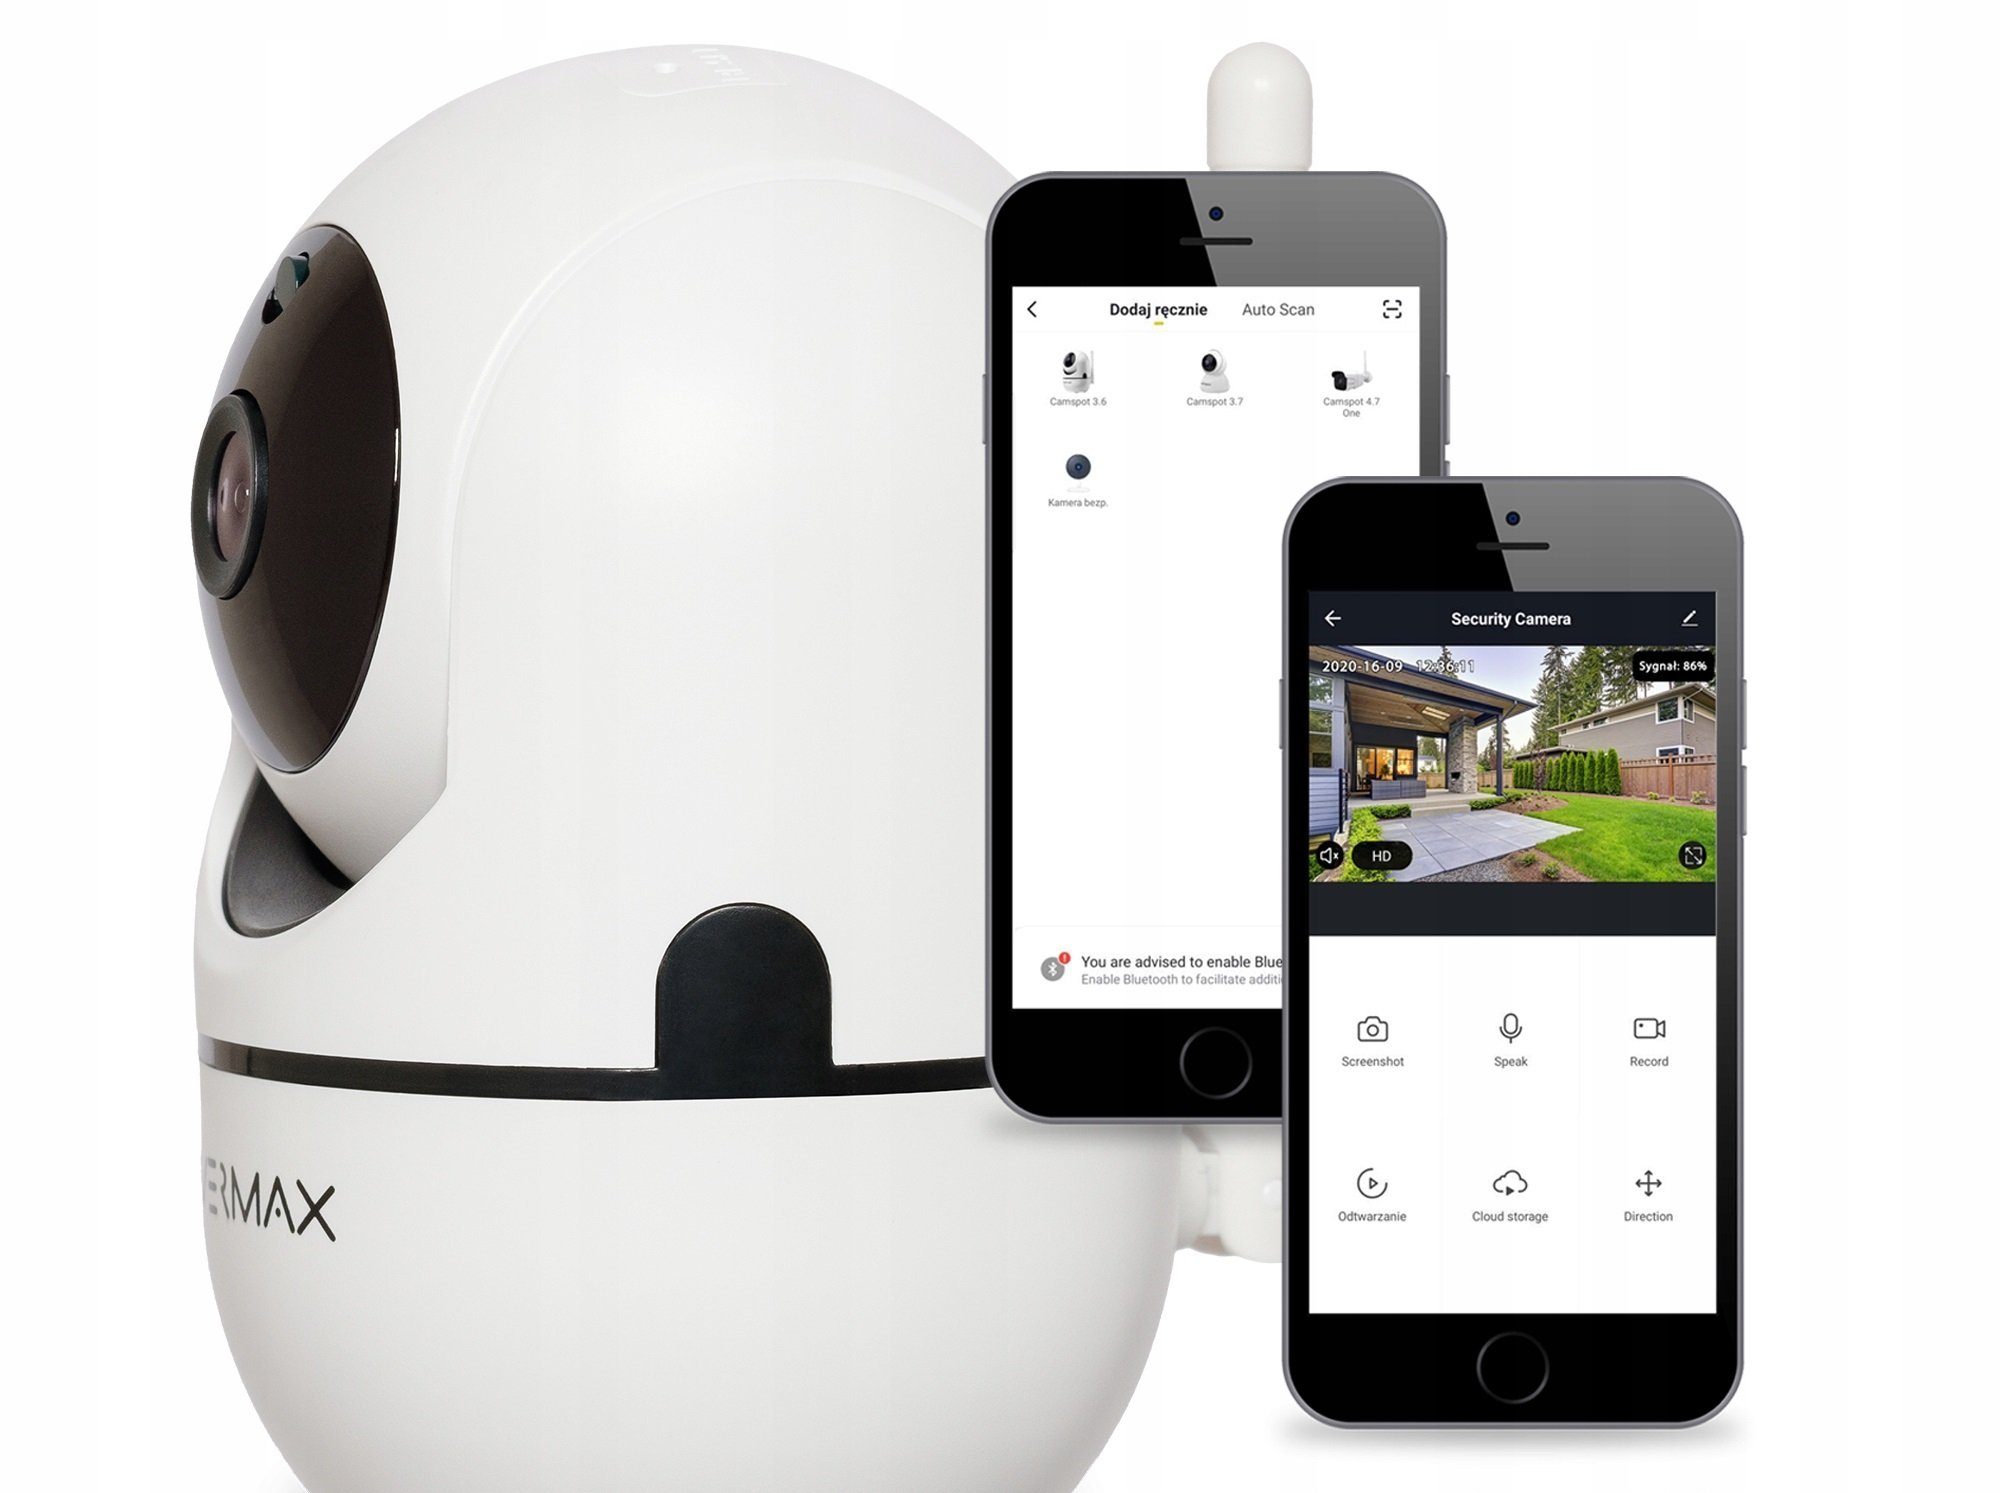 Babyphone Overmax 3.6, CAMSPOT Lautsprecher Mikrofon Wi-Fi Nachtmodus